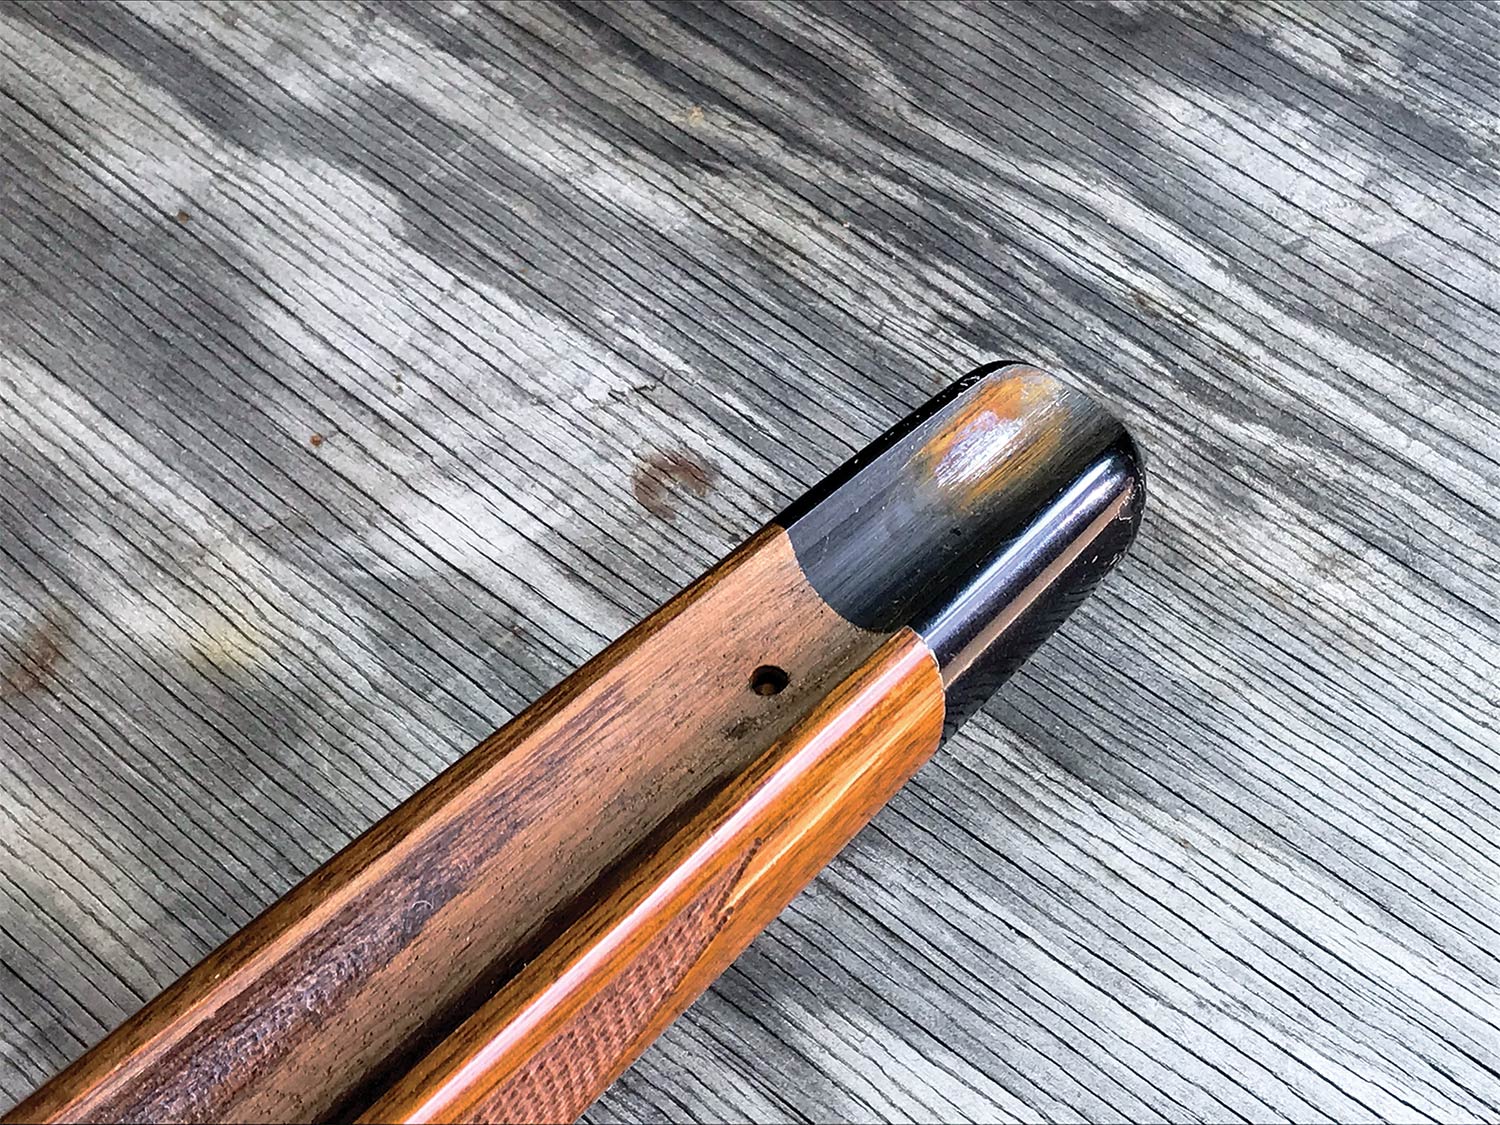 The shiny spot of a rifle barrel.